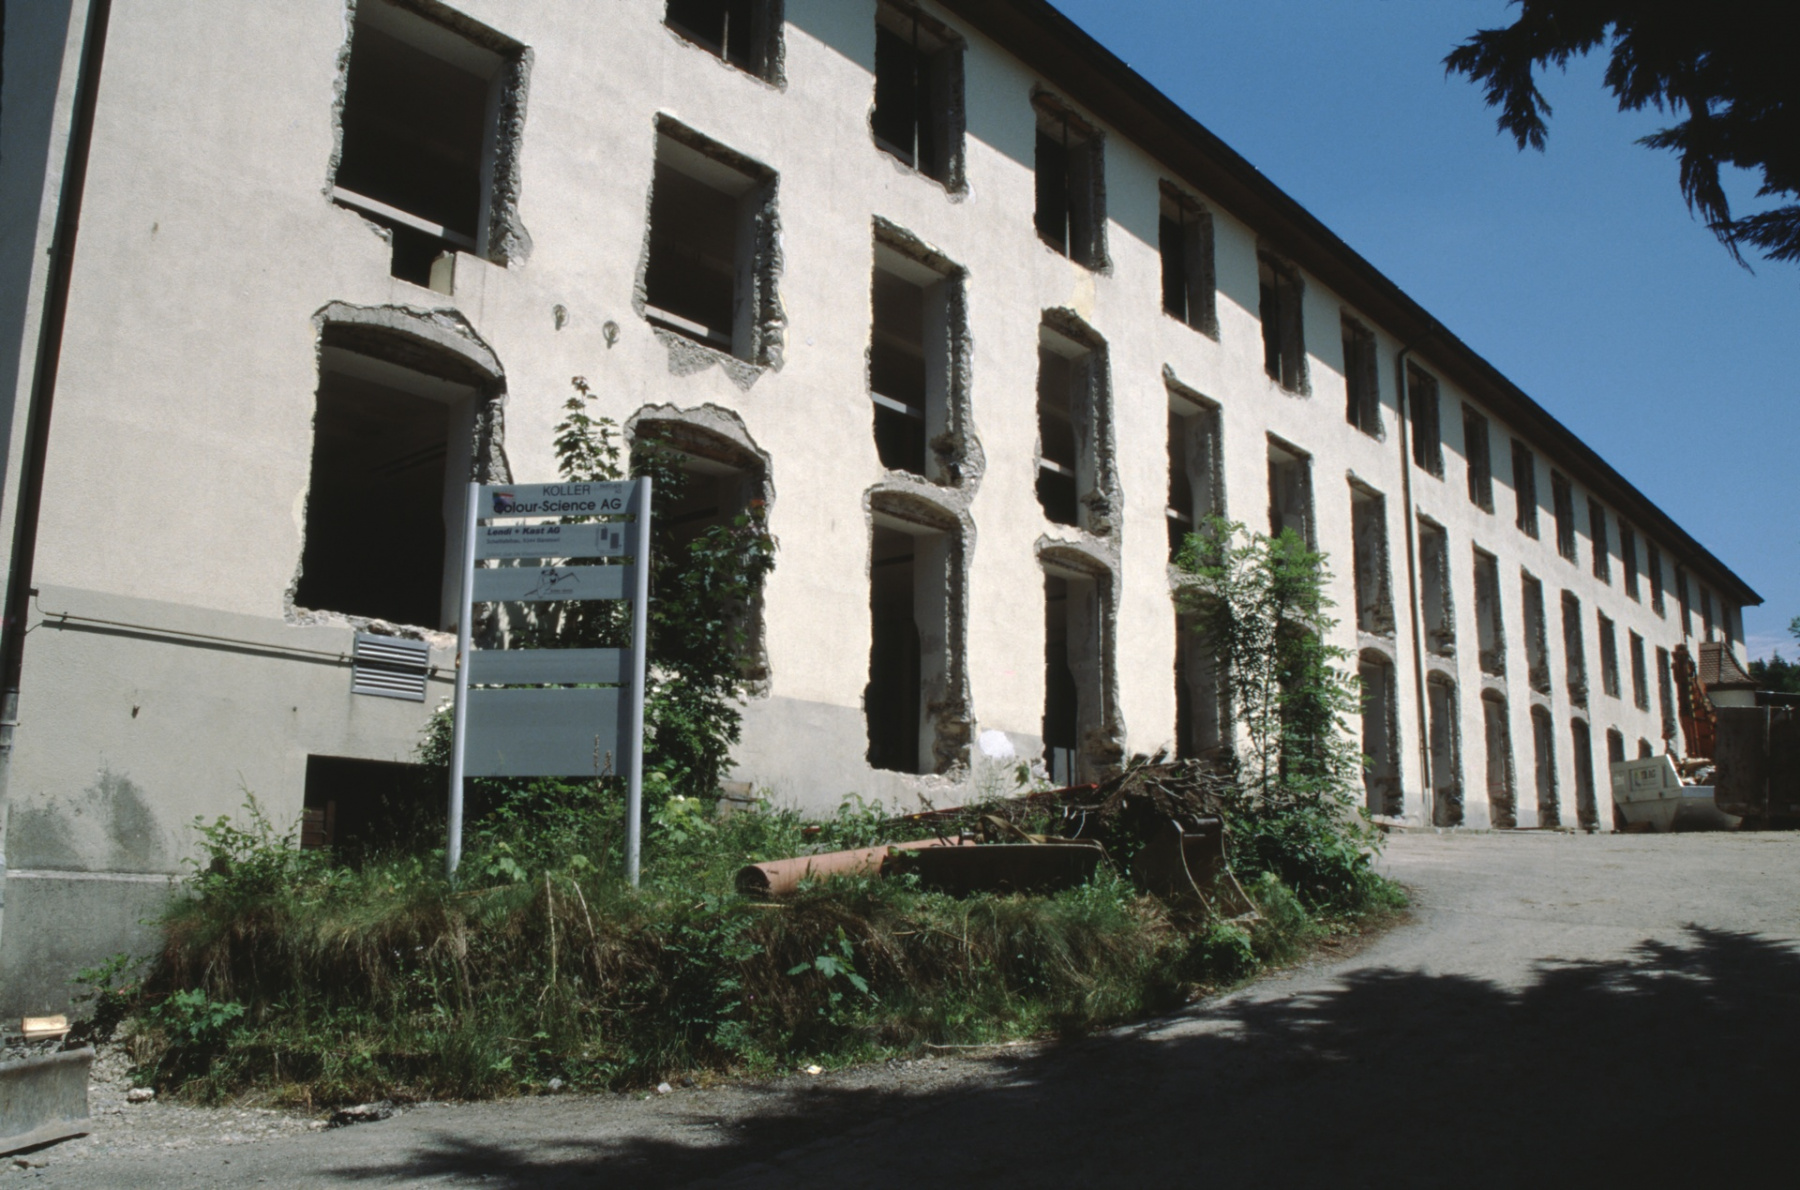 ehemalige Fabrik Spörri, Frontseite, Umbau in Lofts